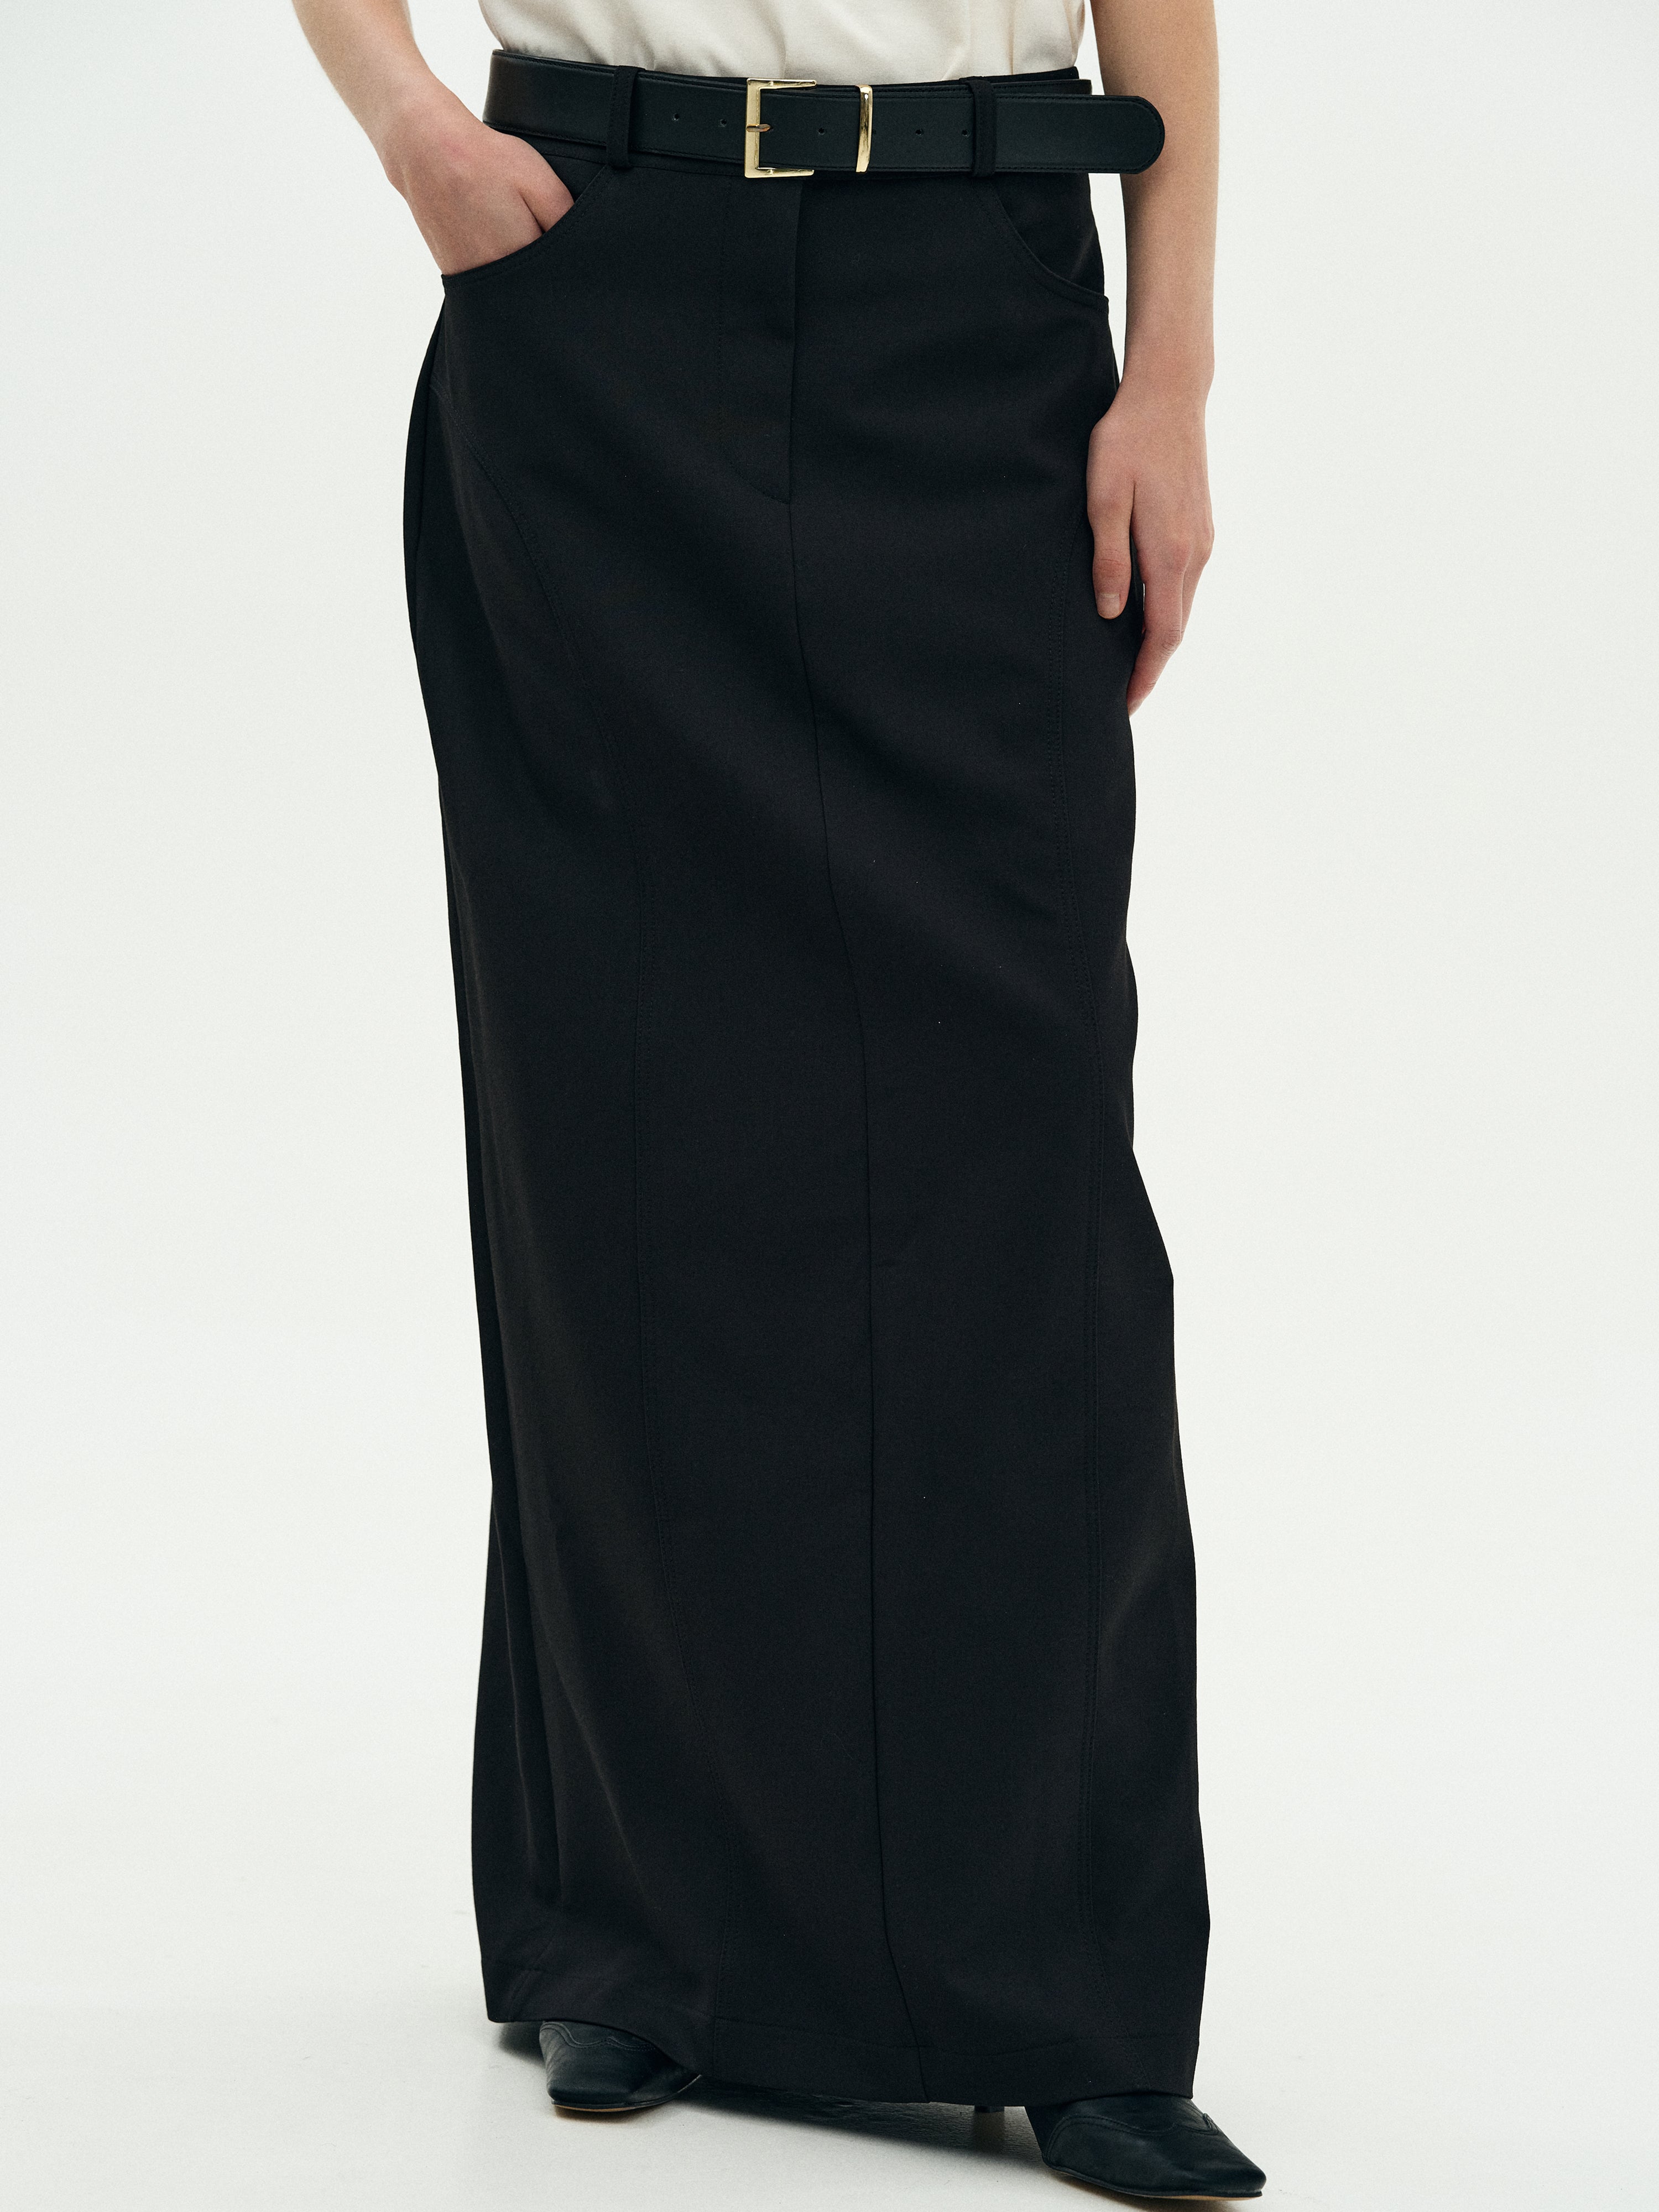 Long Pencil Skirt, Black – SourceUnknown